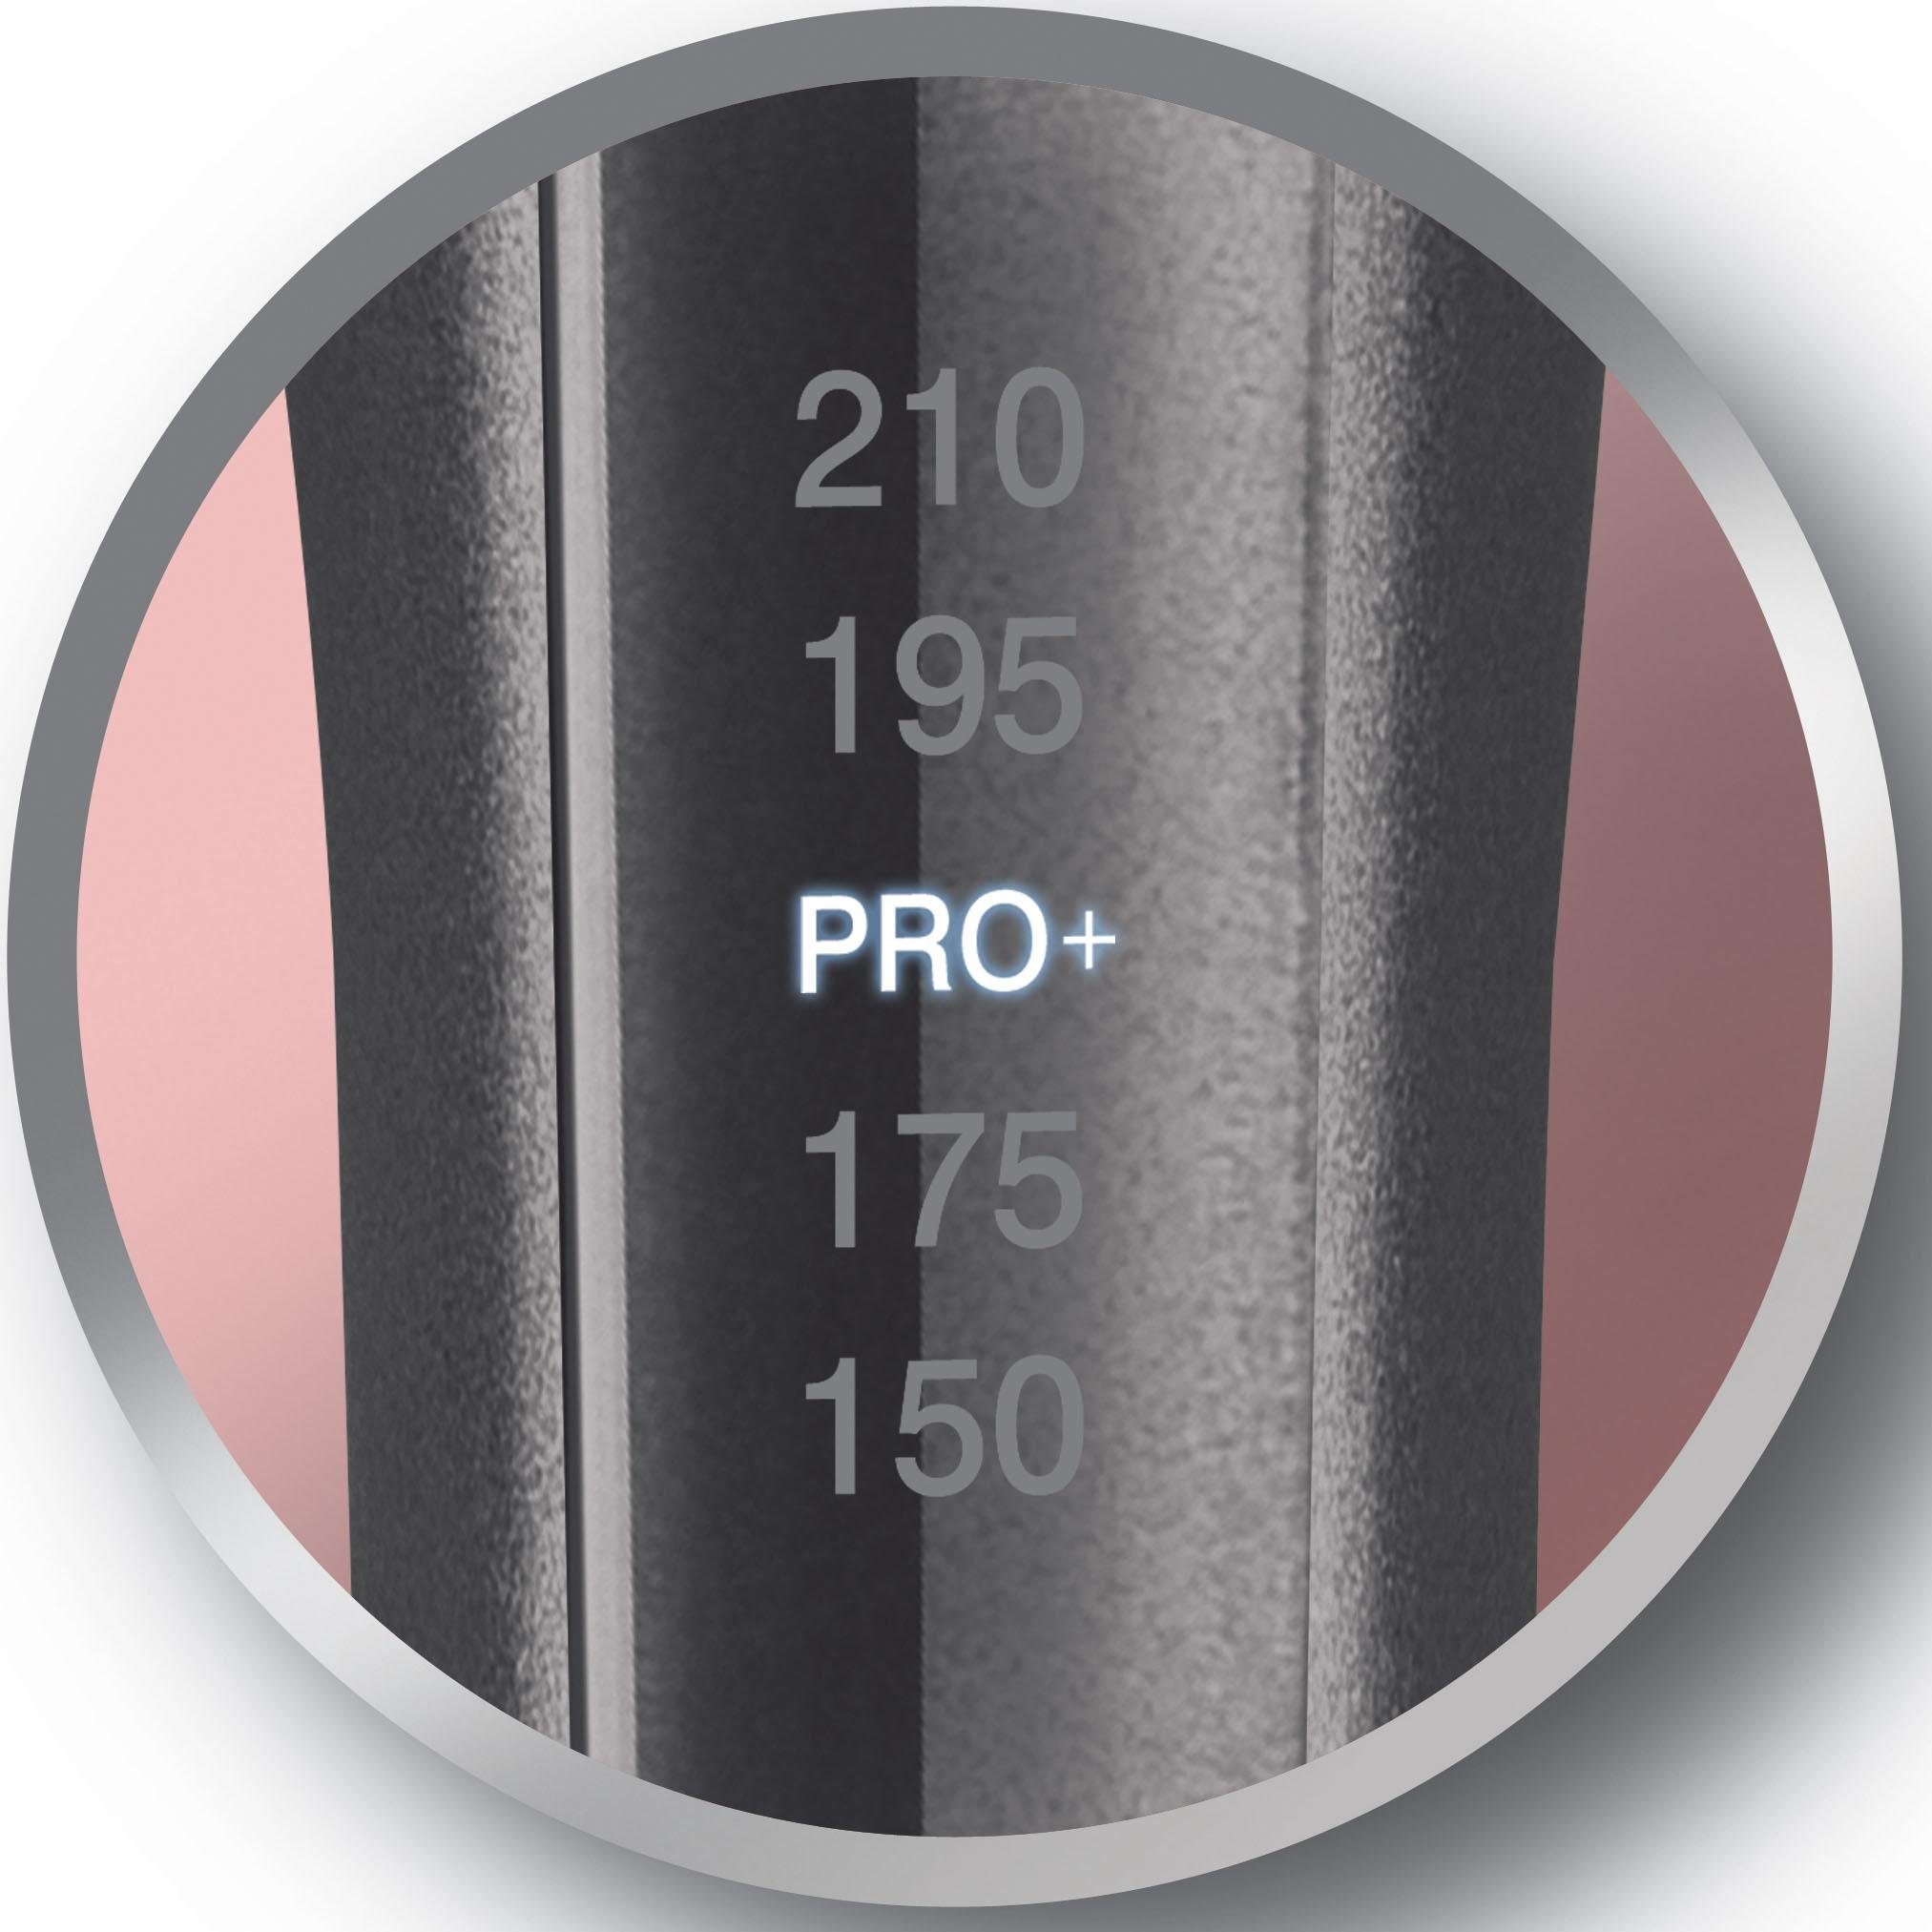 „Pro GripTech-Keramik-Beschichtung, CI83V6, °C) Lockenstab +”-Einstellung (185 Remington